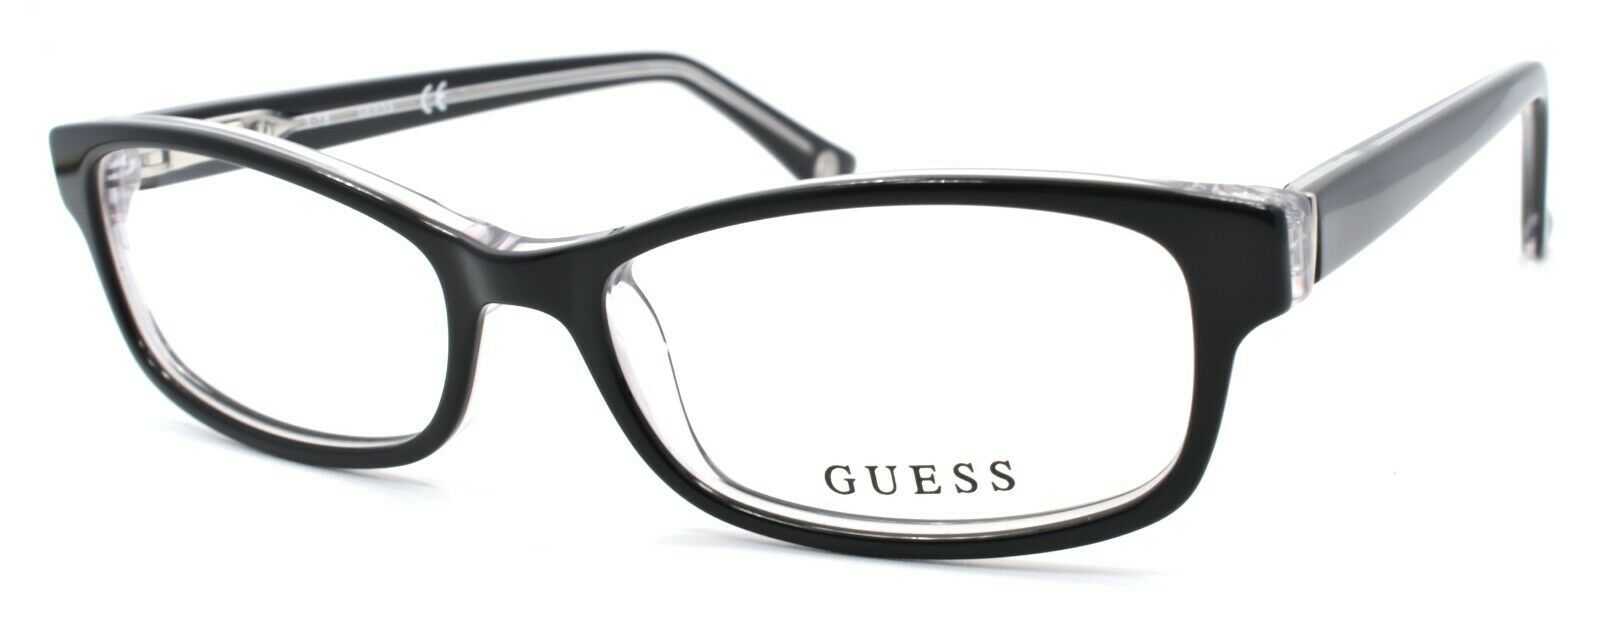 1-GUESS GU2517 003 Women's Eyeglasses Frames 50-15-135 Black / Crystal-664689713875-IKSpecs